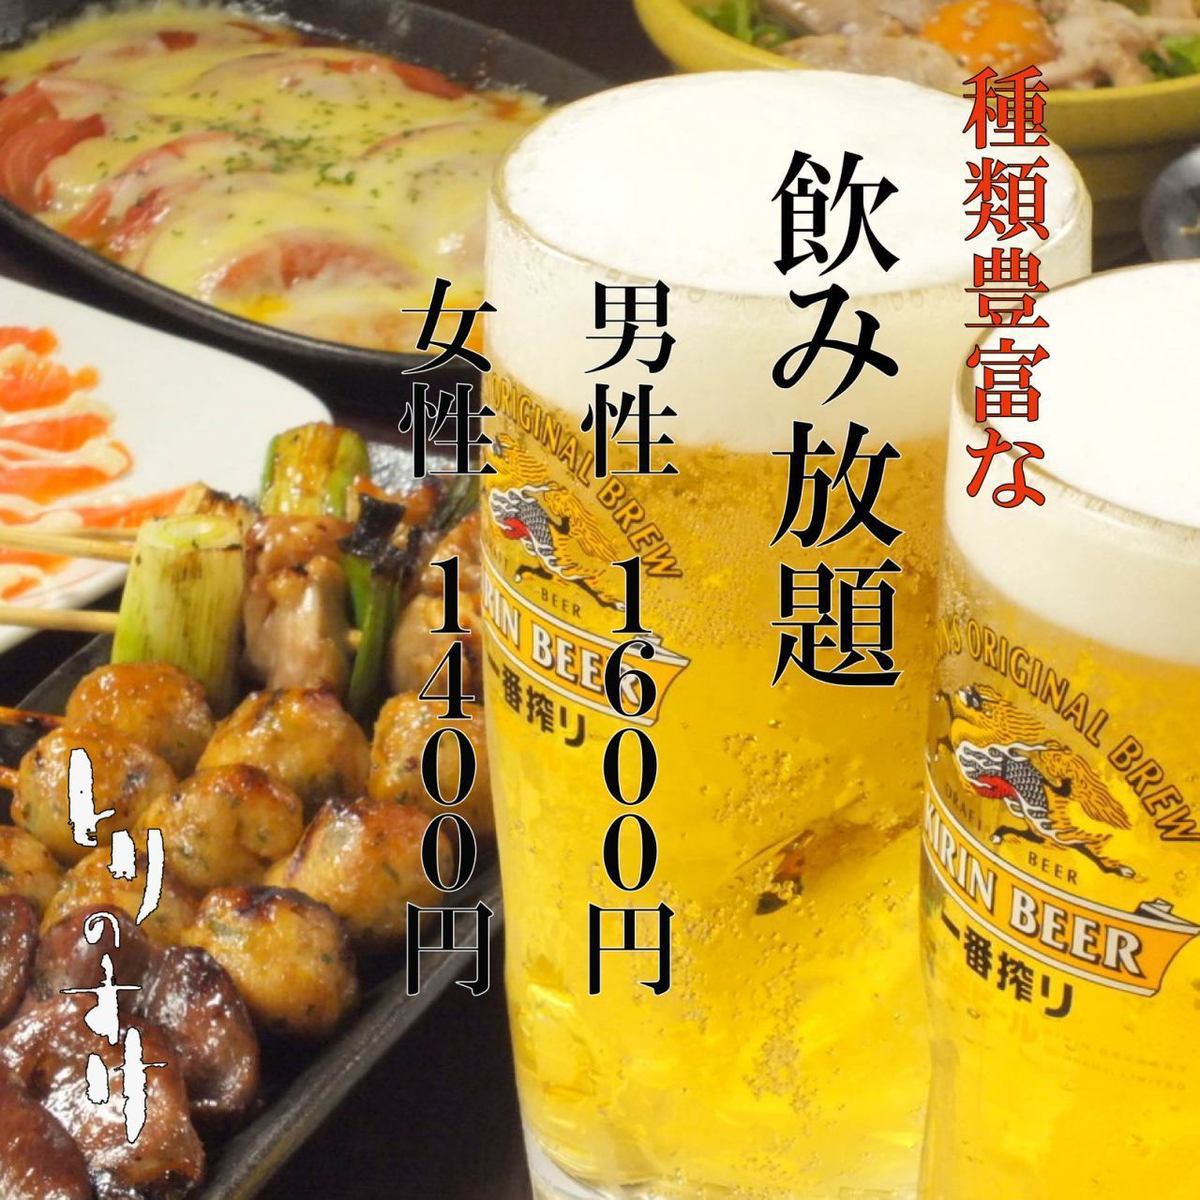 ≪Torinosuke可以單獨出售♪≫冰鎮啤酒和烤雞肉串很好◎